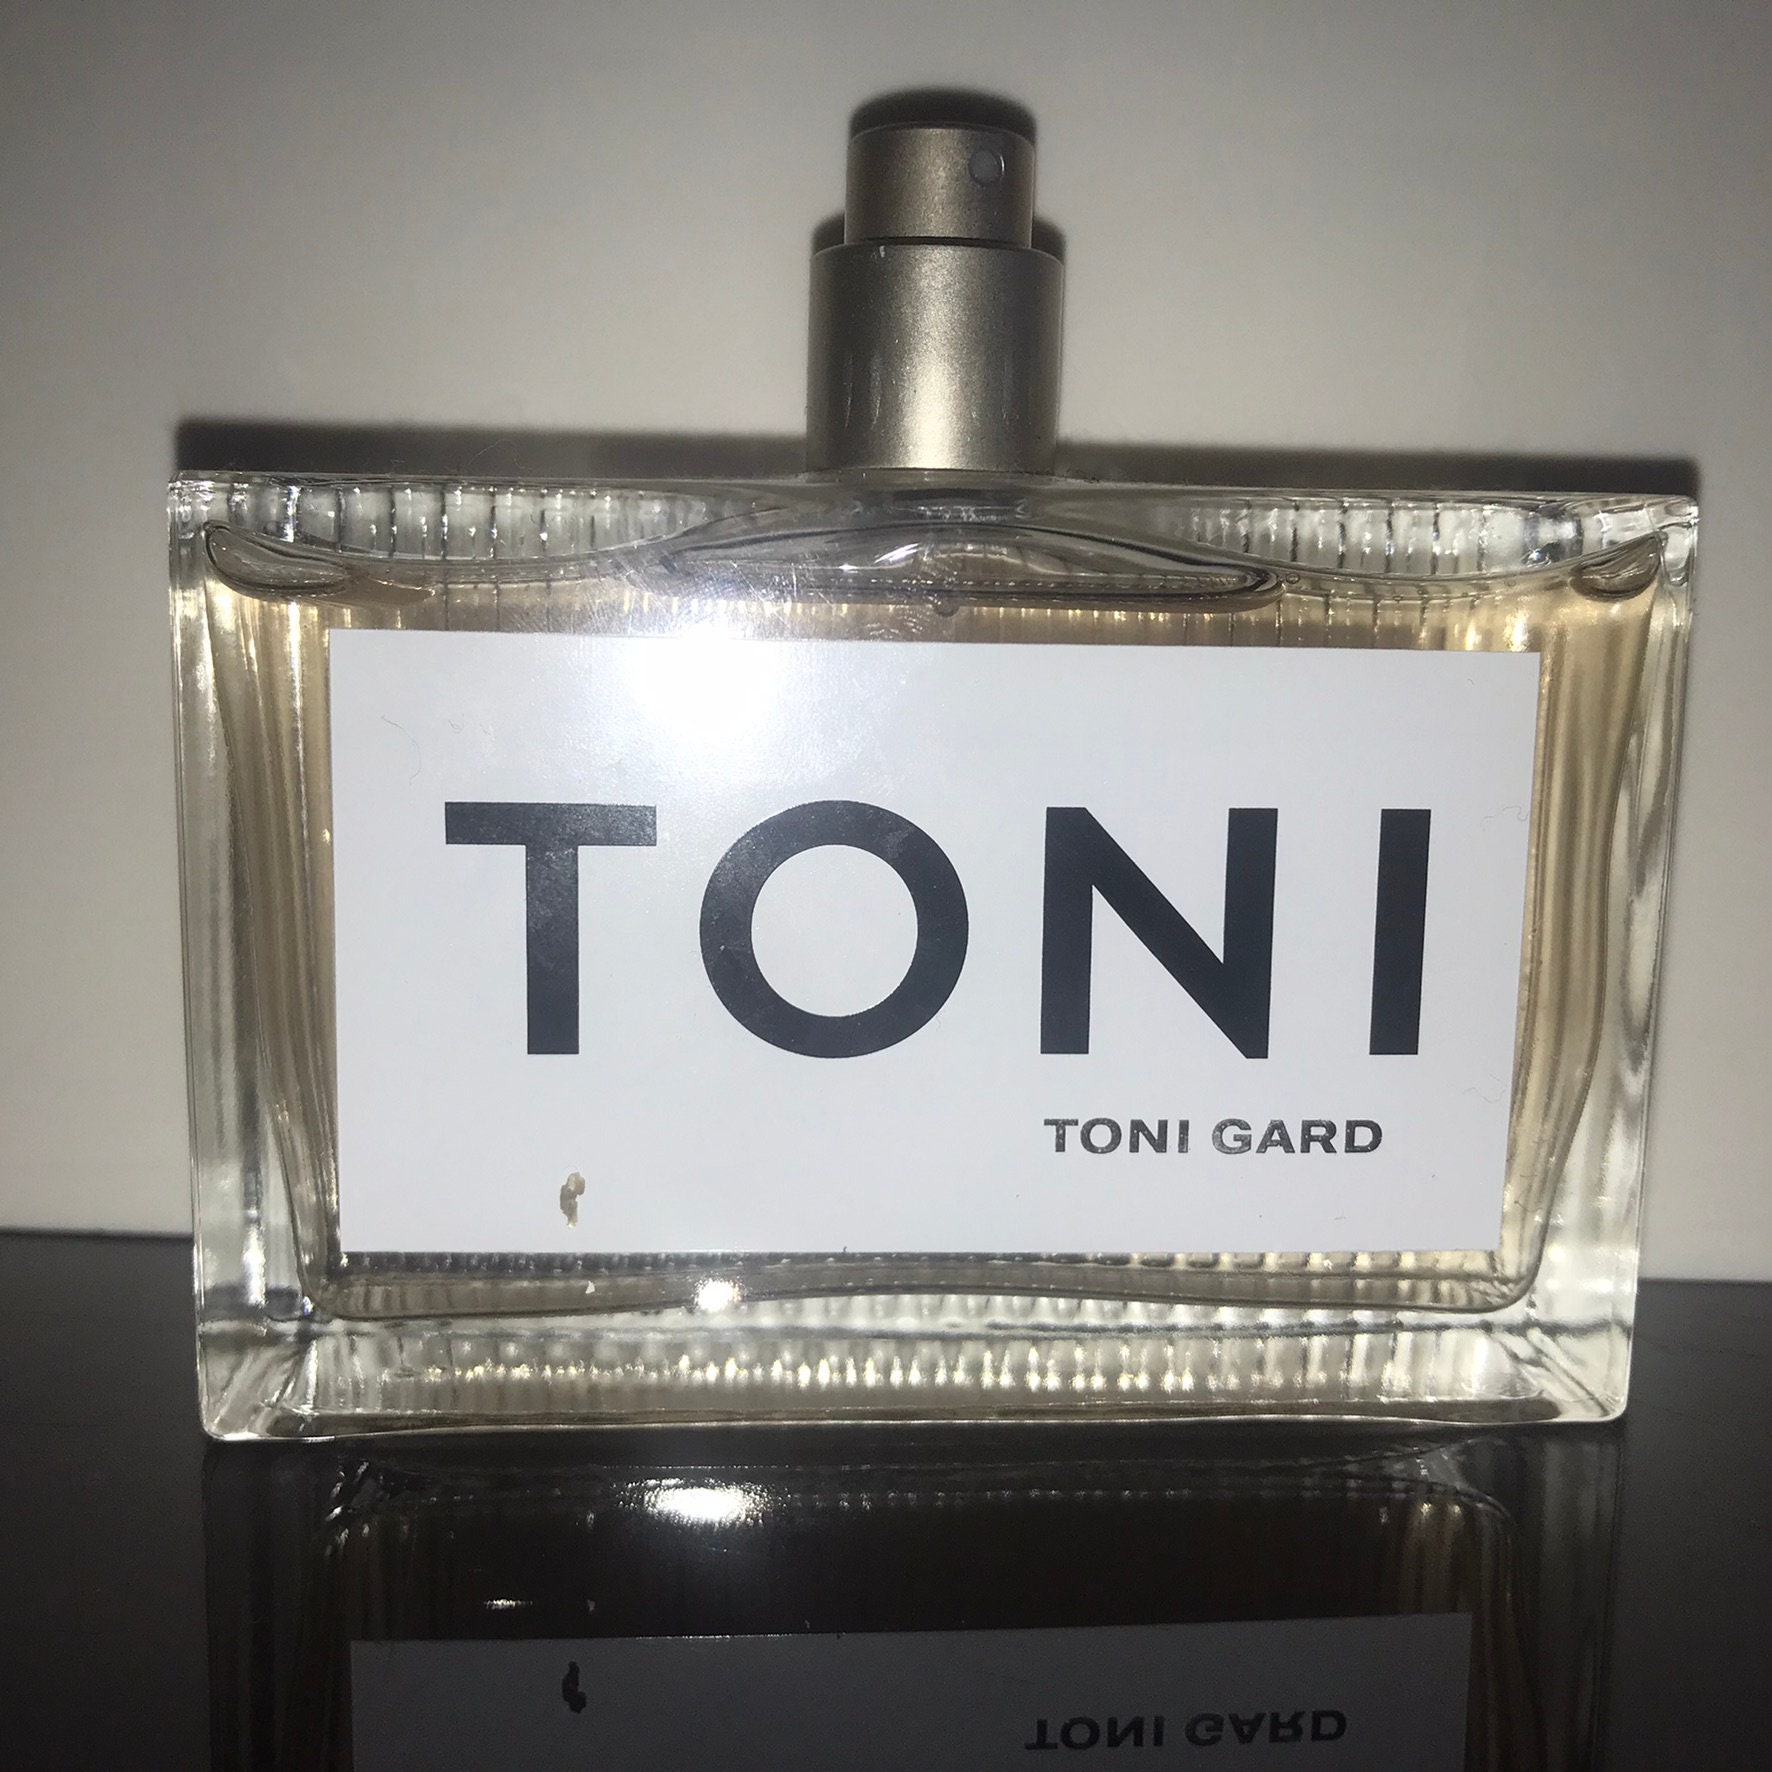 Gard Toni Etsy - 2002 De 90 Toni Ml Year: Parfum Eau